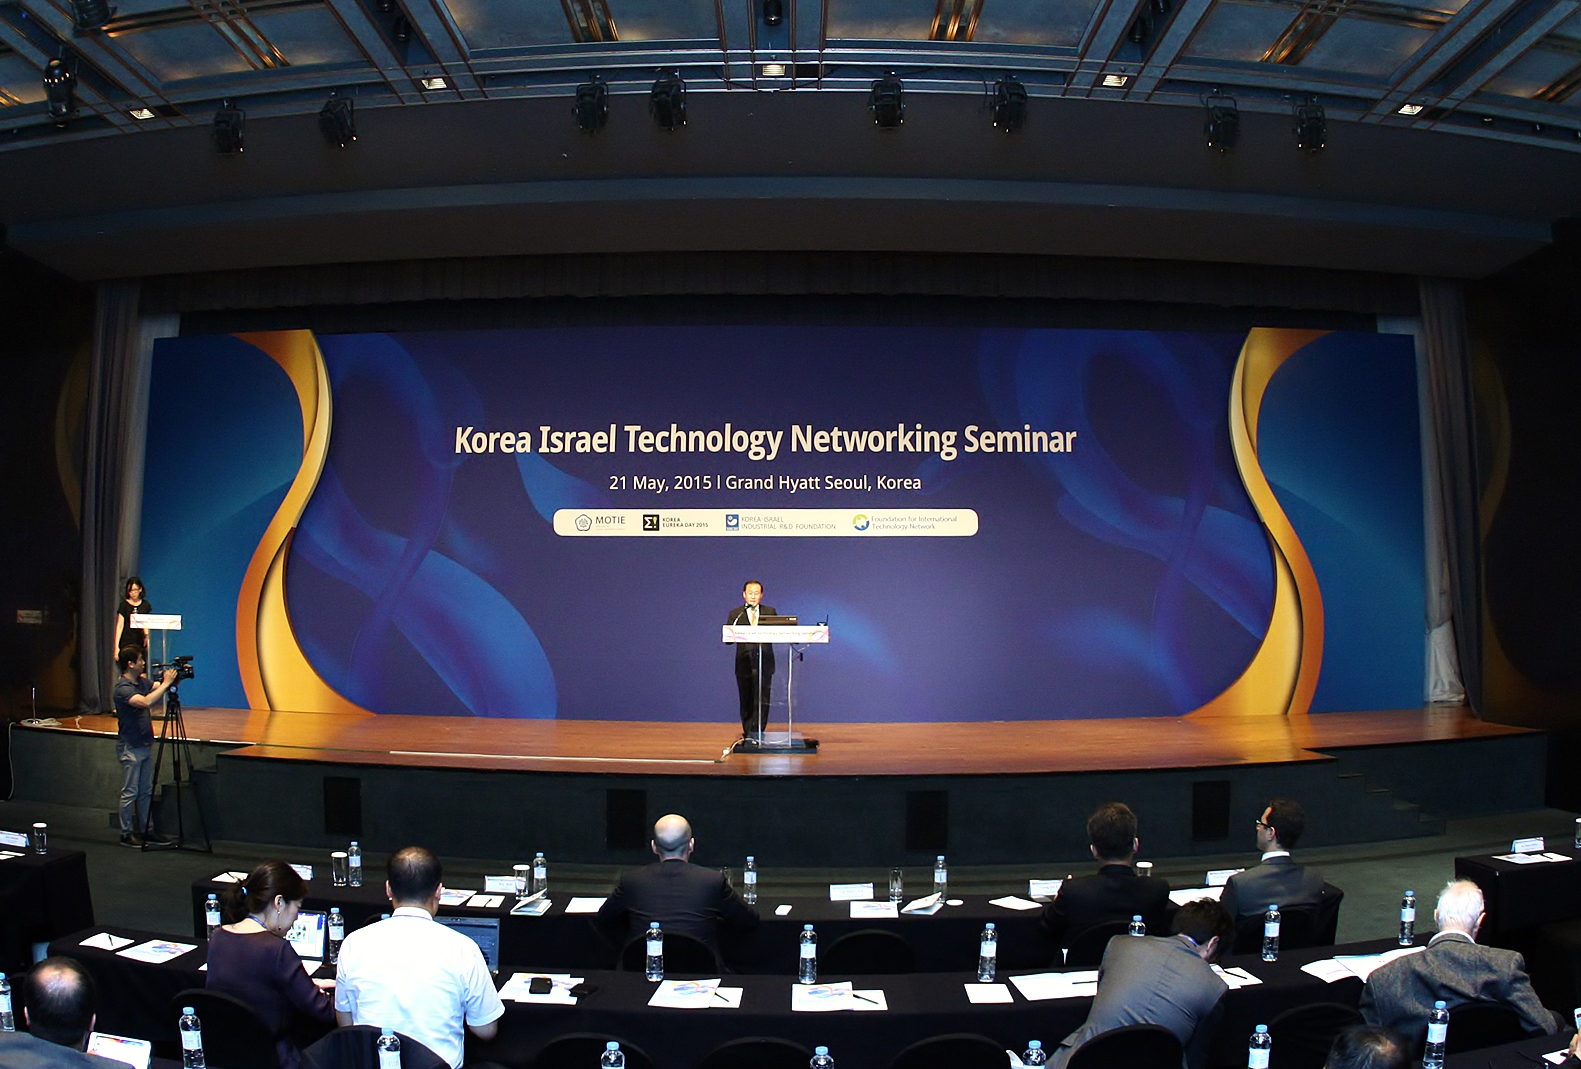 Korea Israel TECHNOLOGY NETWORKING SEMINAR (2015.5.21)